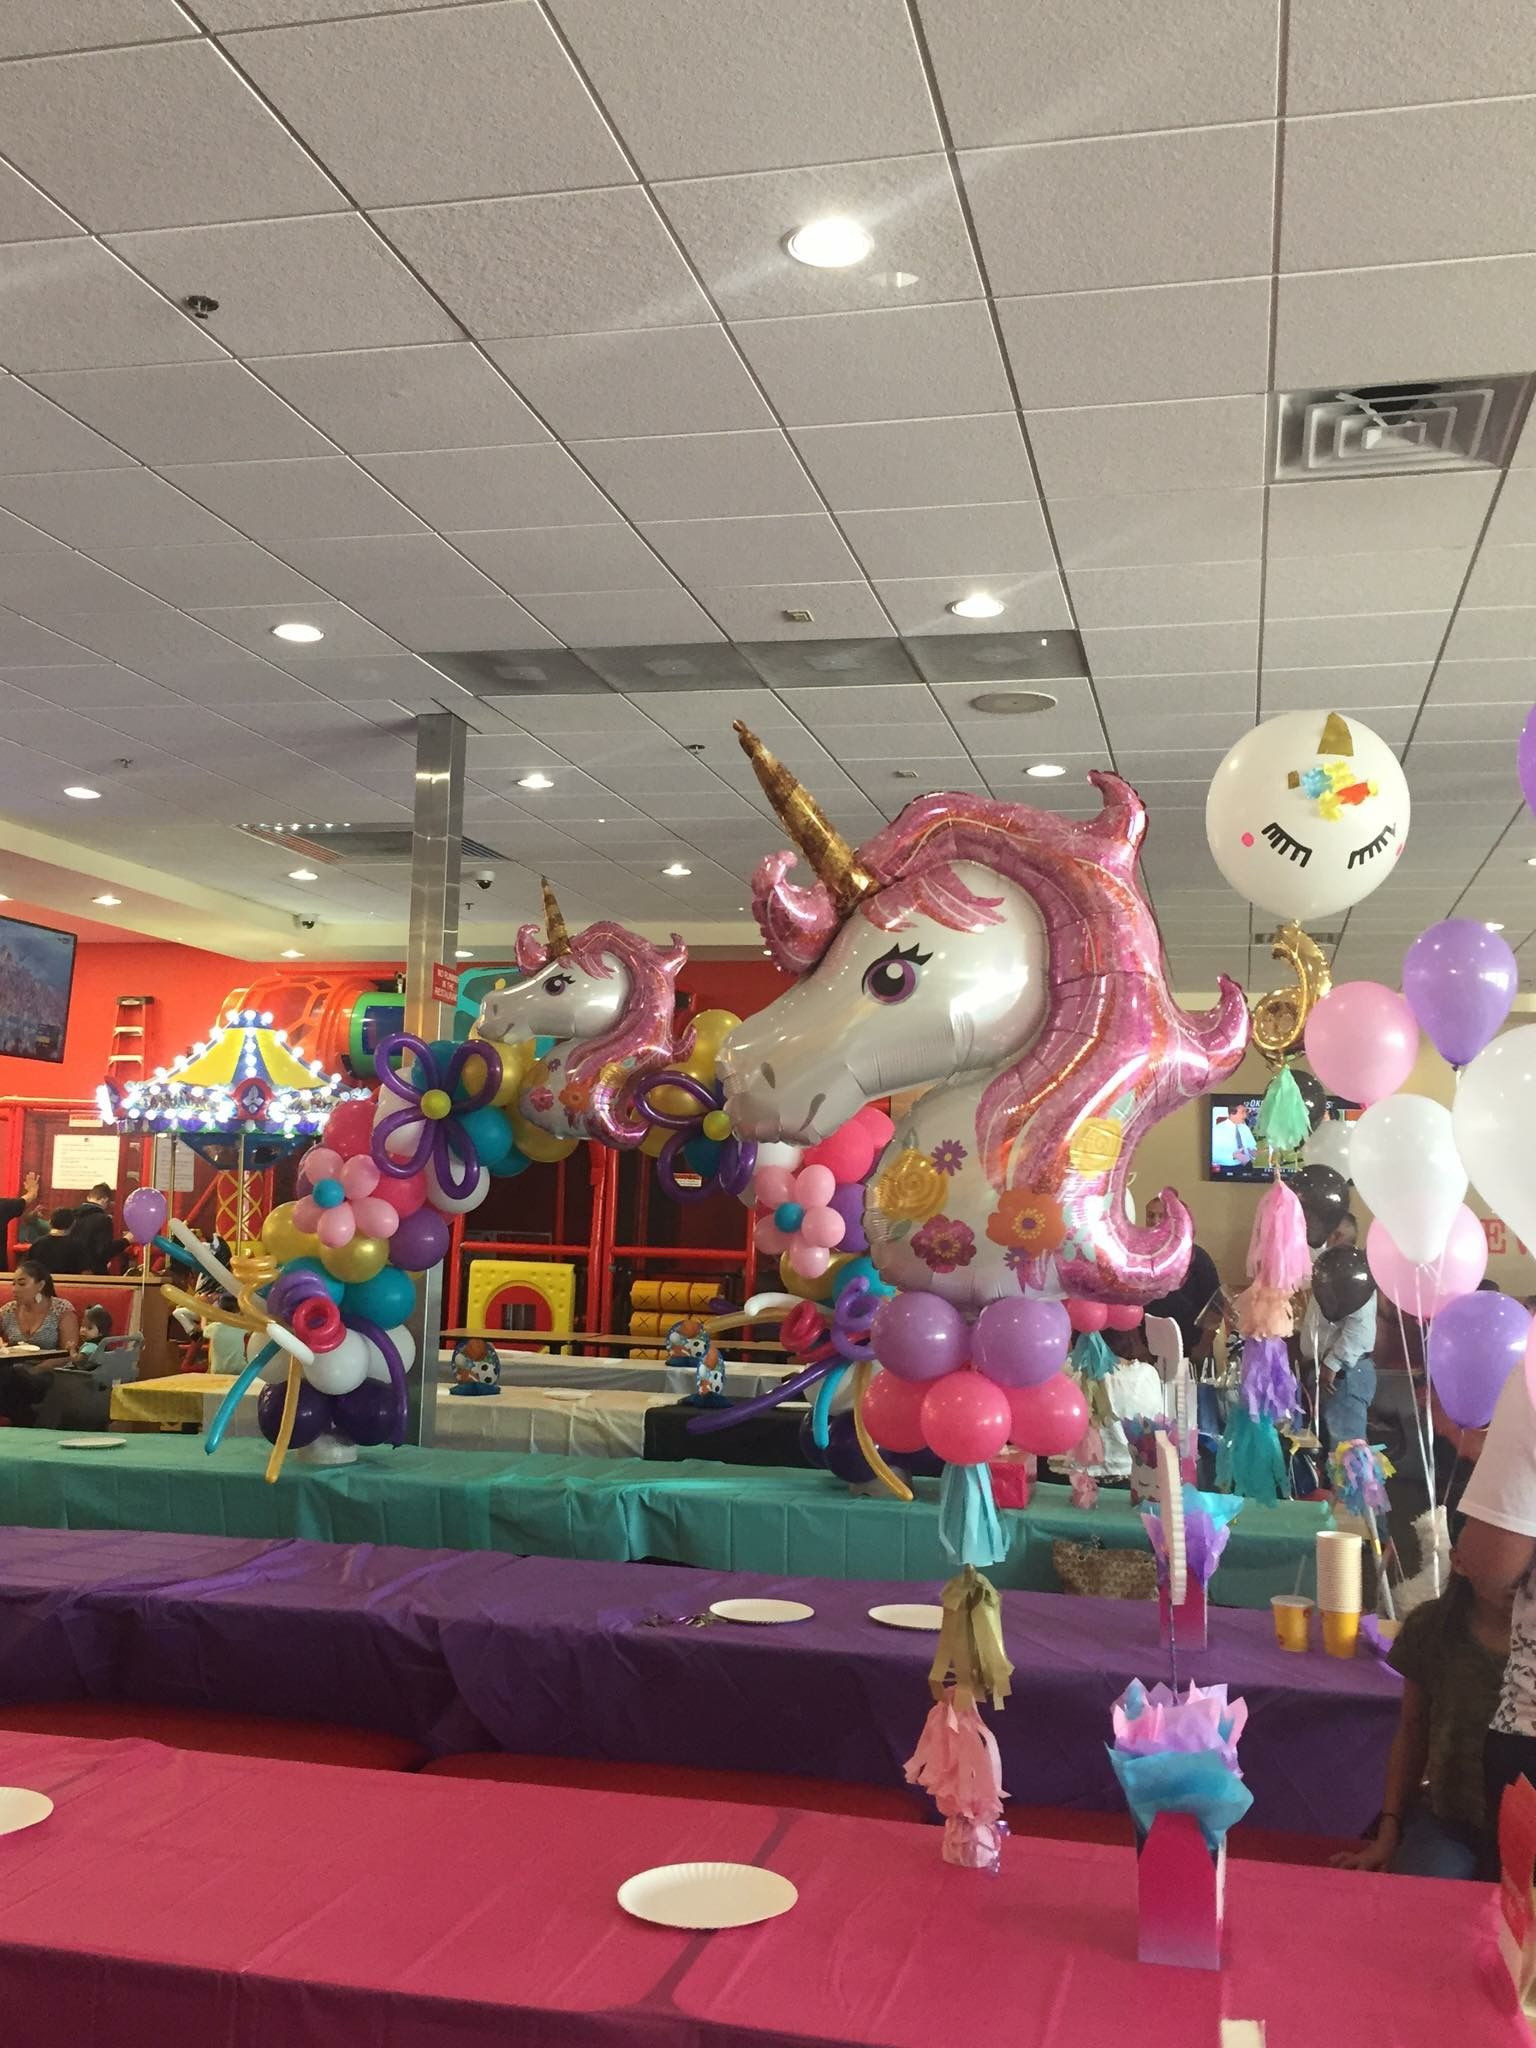 Unicorn Party Centerpiece Ideas
 Unicorn centerpieces Unicorn Party in 2019